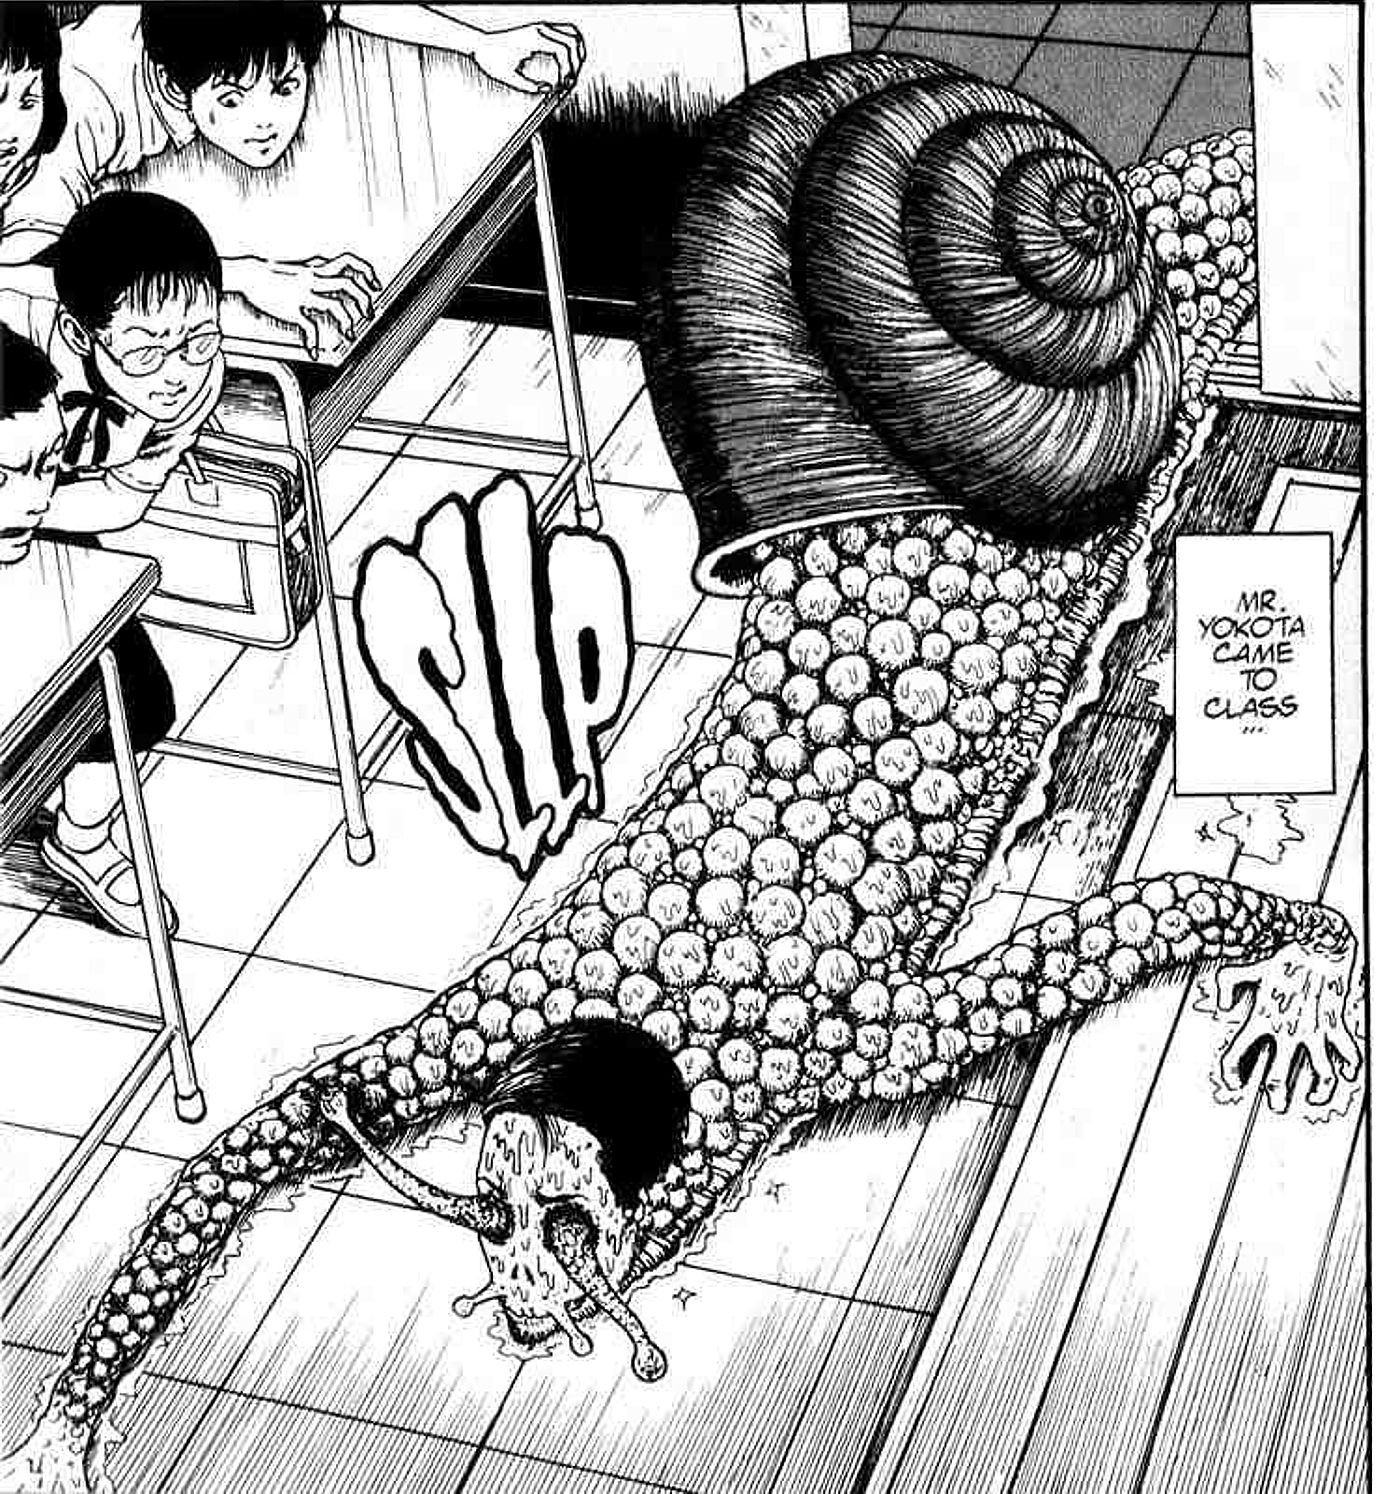 Mr. Yokota Snail from Uzumaki